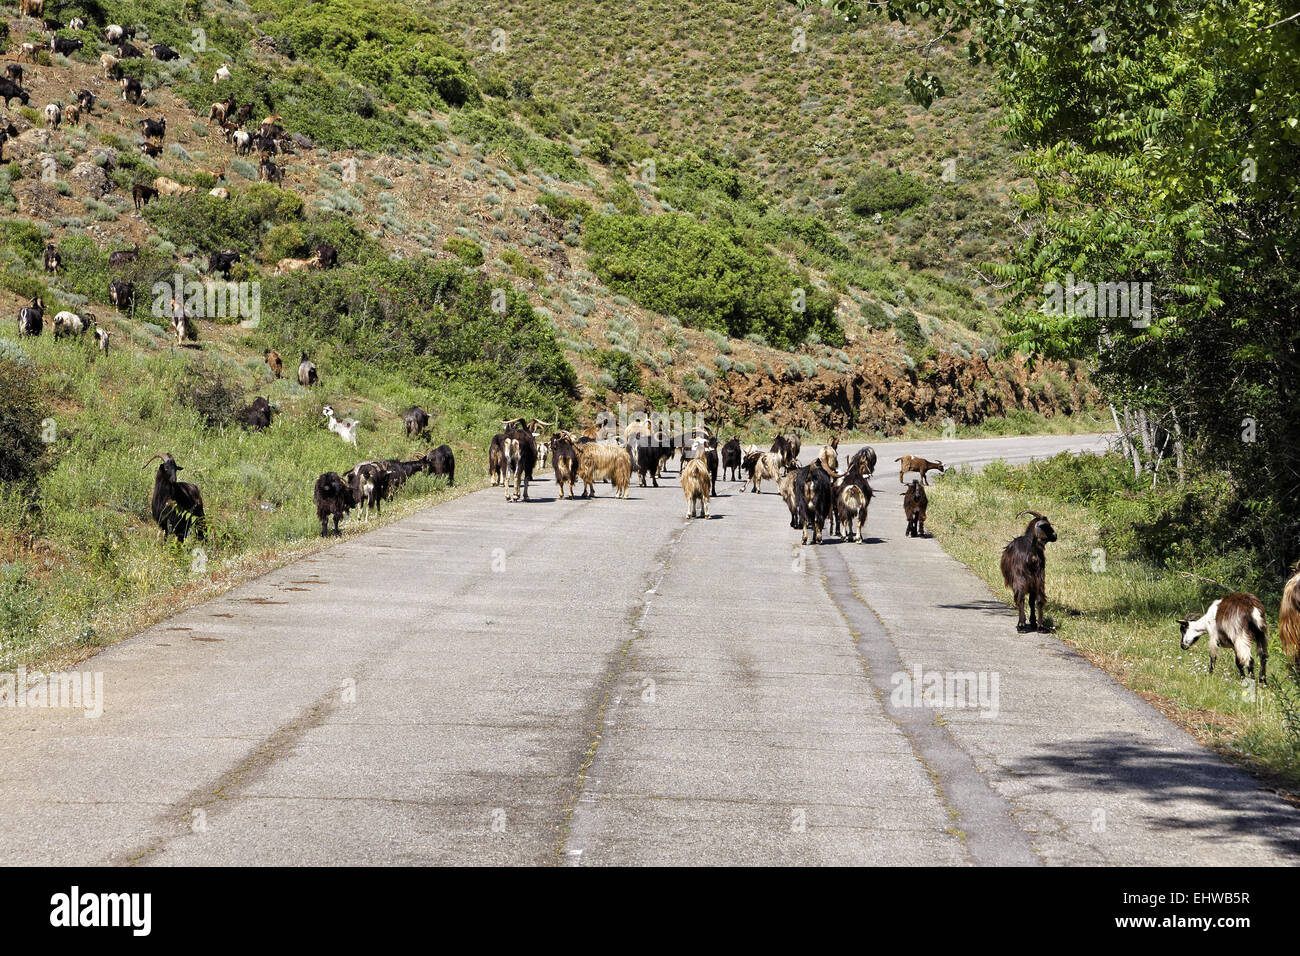 Goats near Belgodere, Nebbio region, Corsic Stock Photo